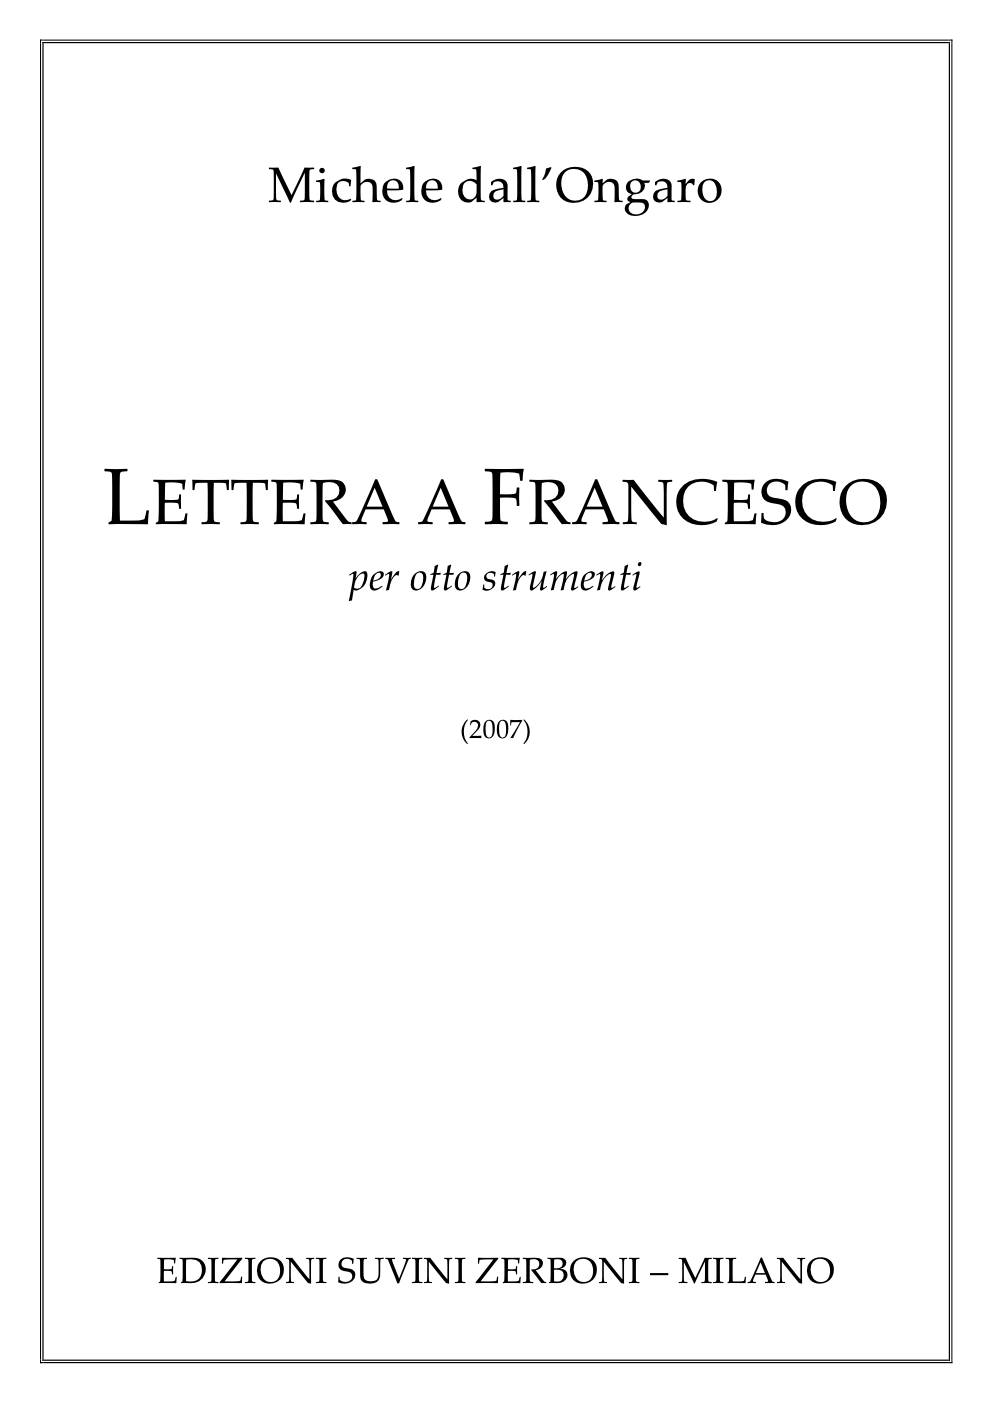 Lettera a francesco_Dall Ongaro 1